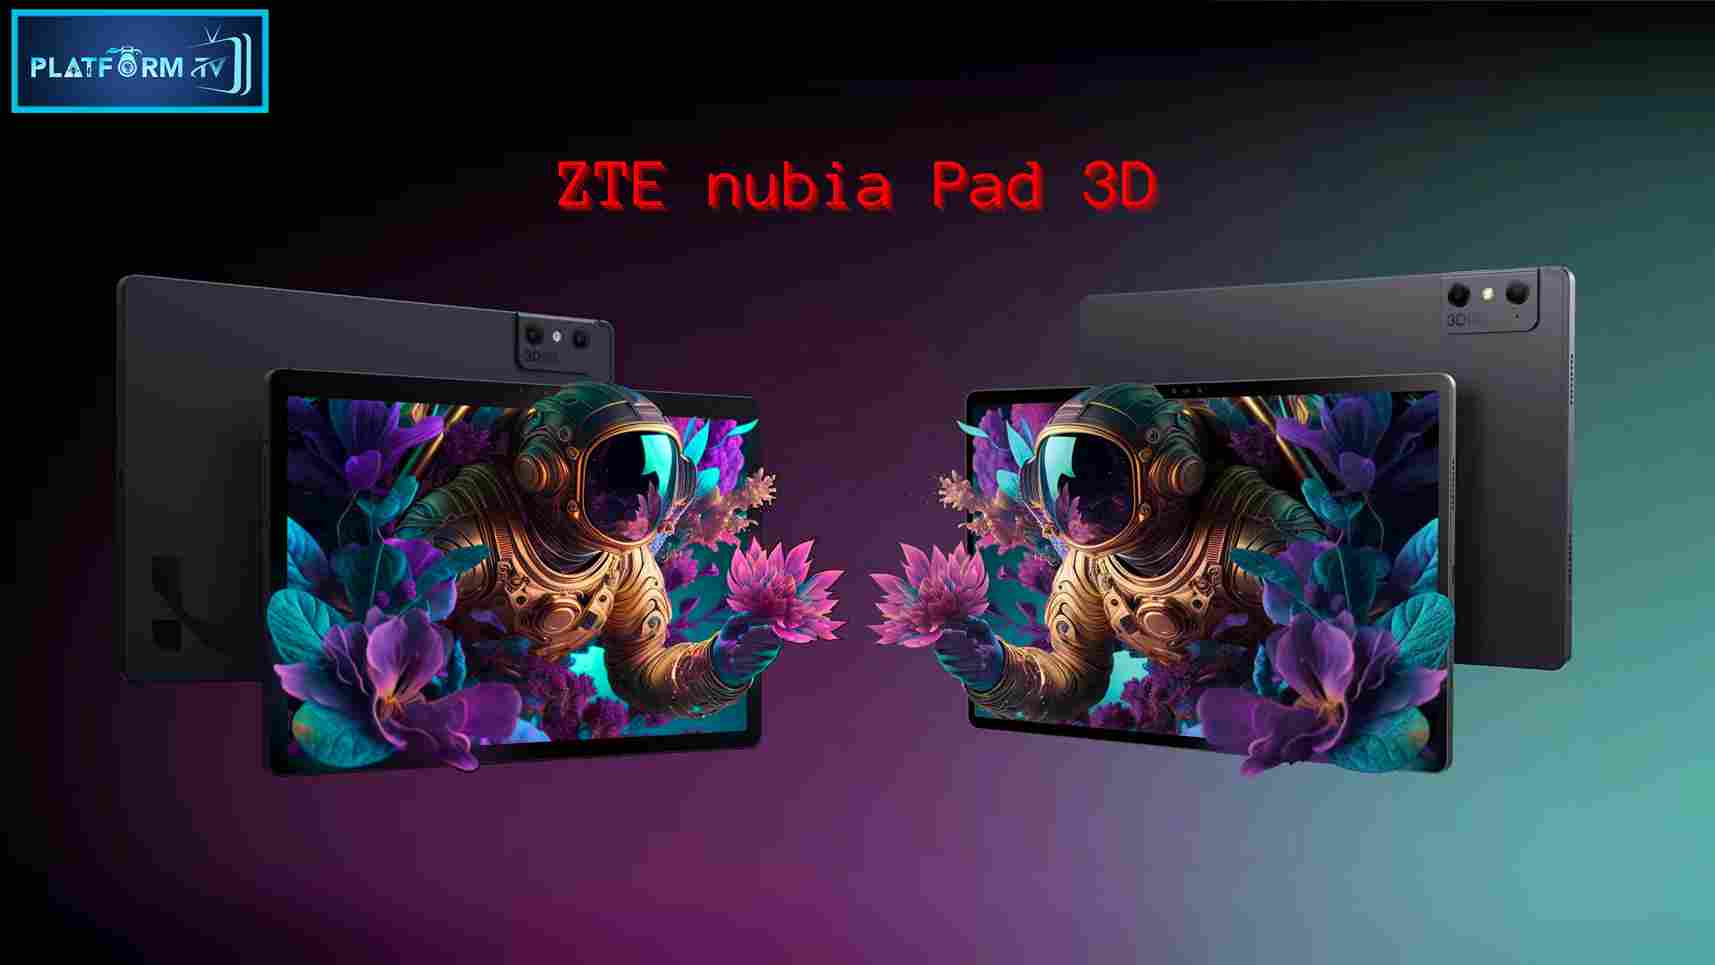 World's First 3D Tablet - Platform Tamil